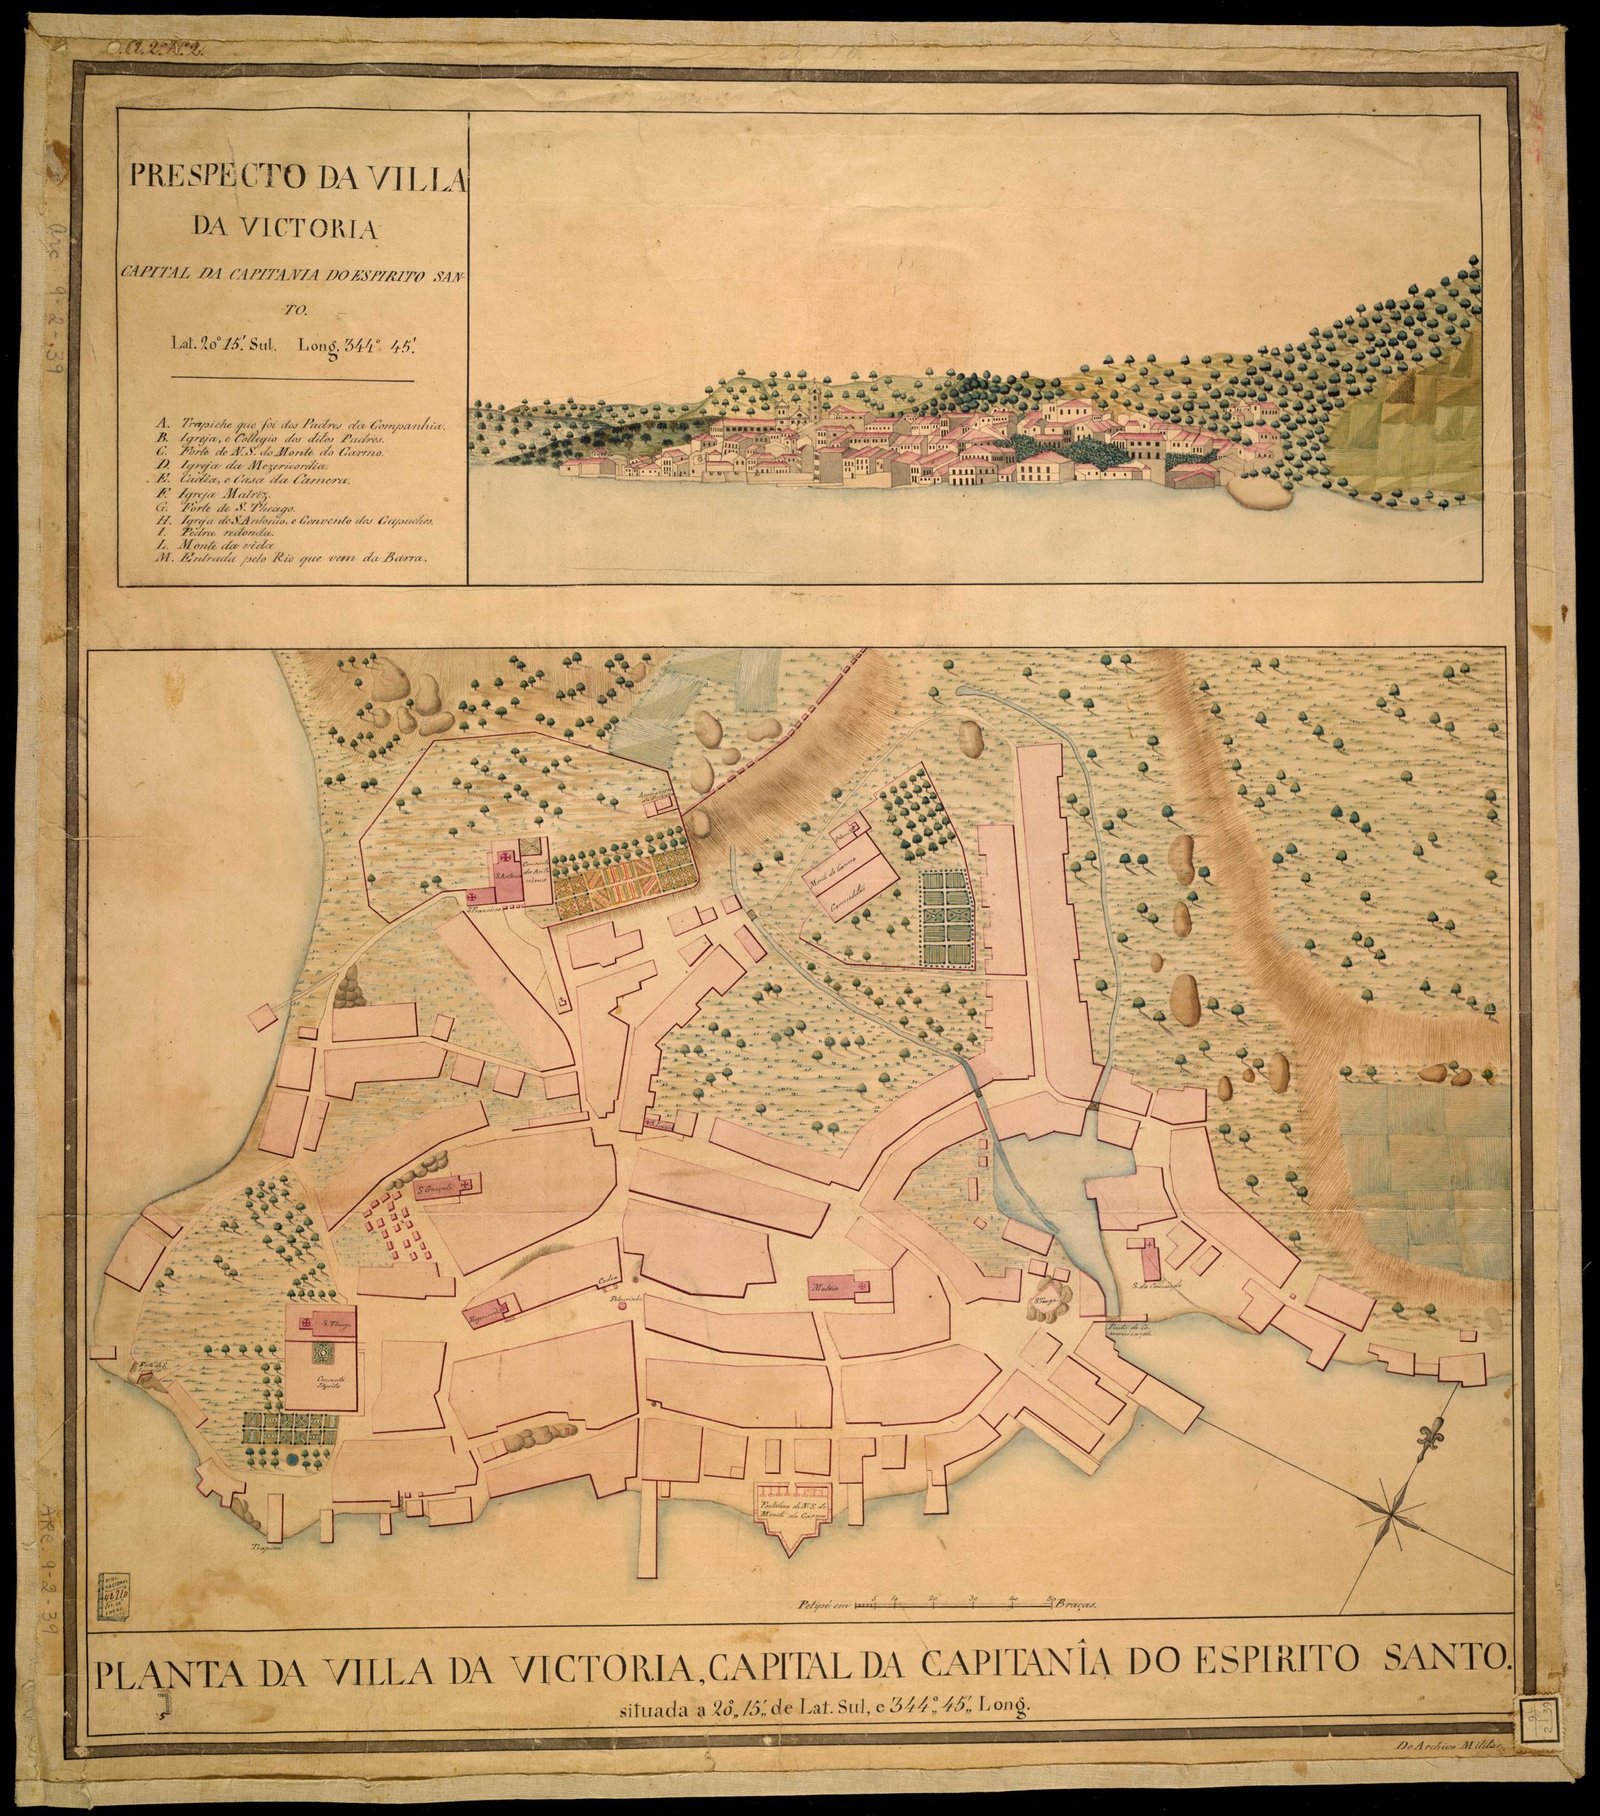 Prespecto da Villa da Victoria e Planta da villa da Victoria : capital da capitania do Espírito Santo (1767)